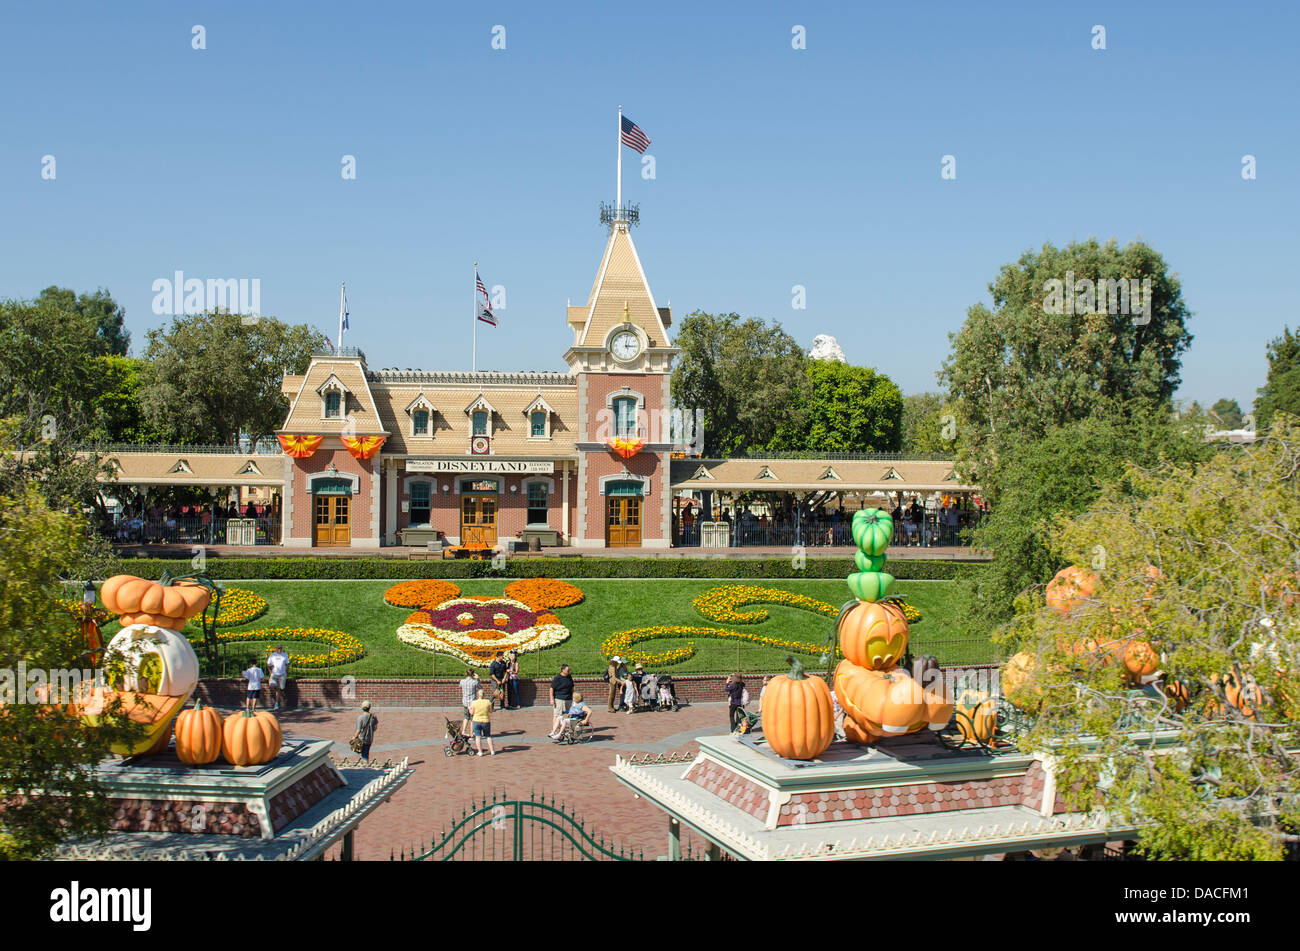 Disney World Railroad station magic kingdom Disneyland, Anaheim, California. Stock Photo